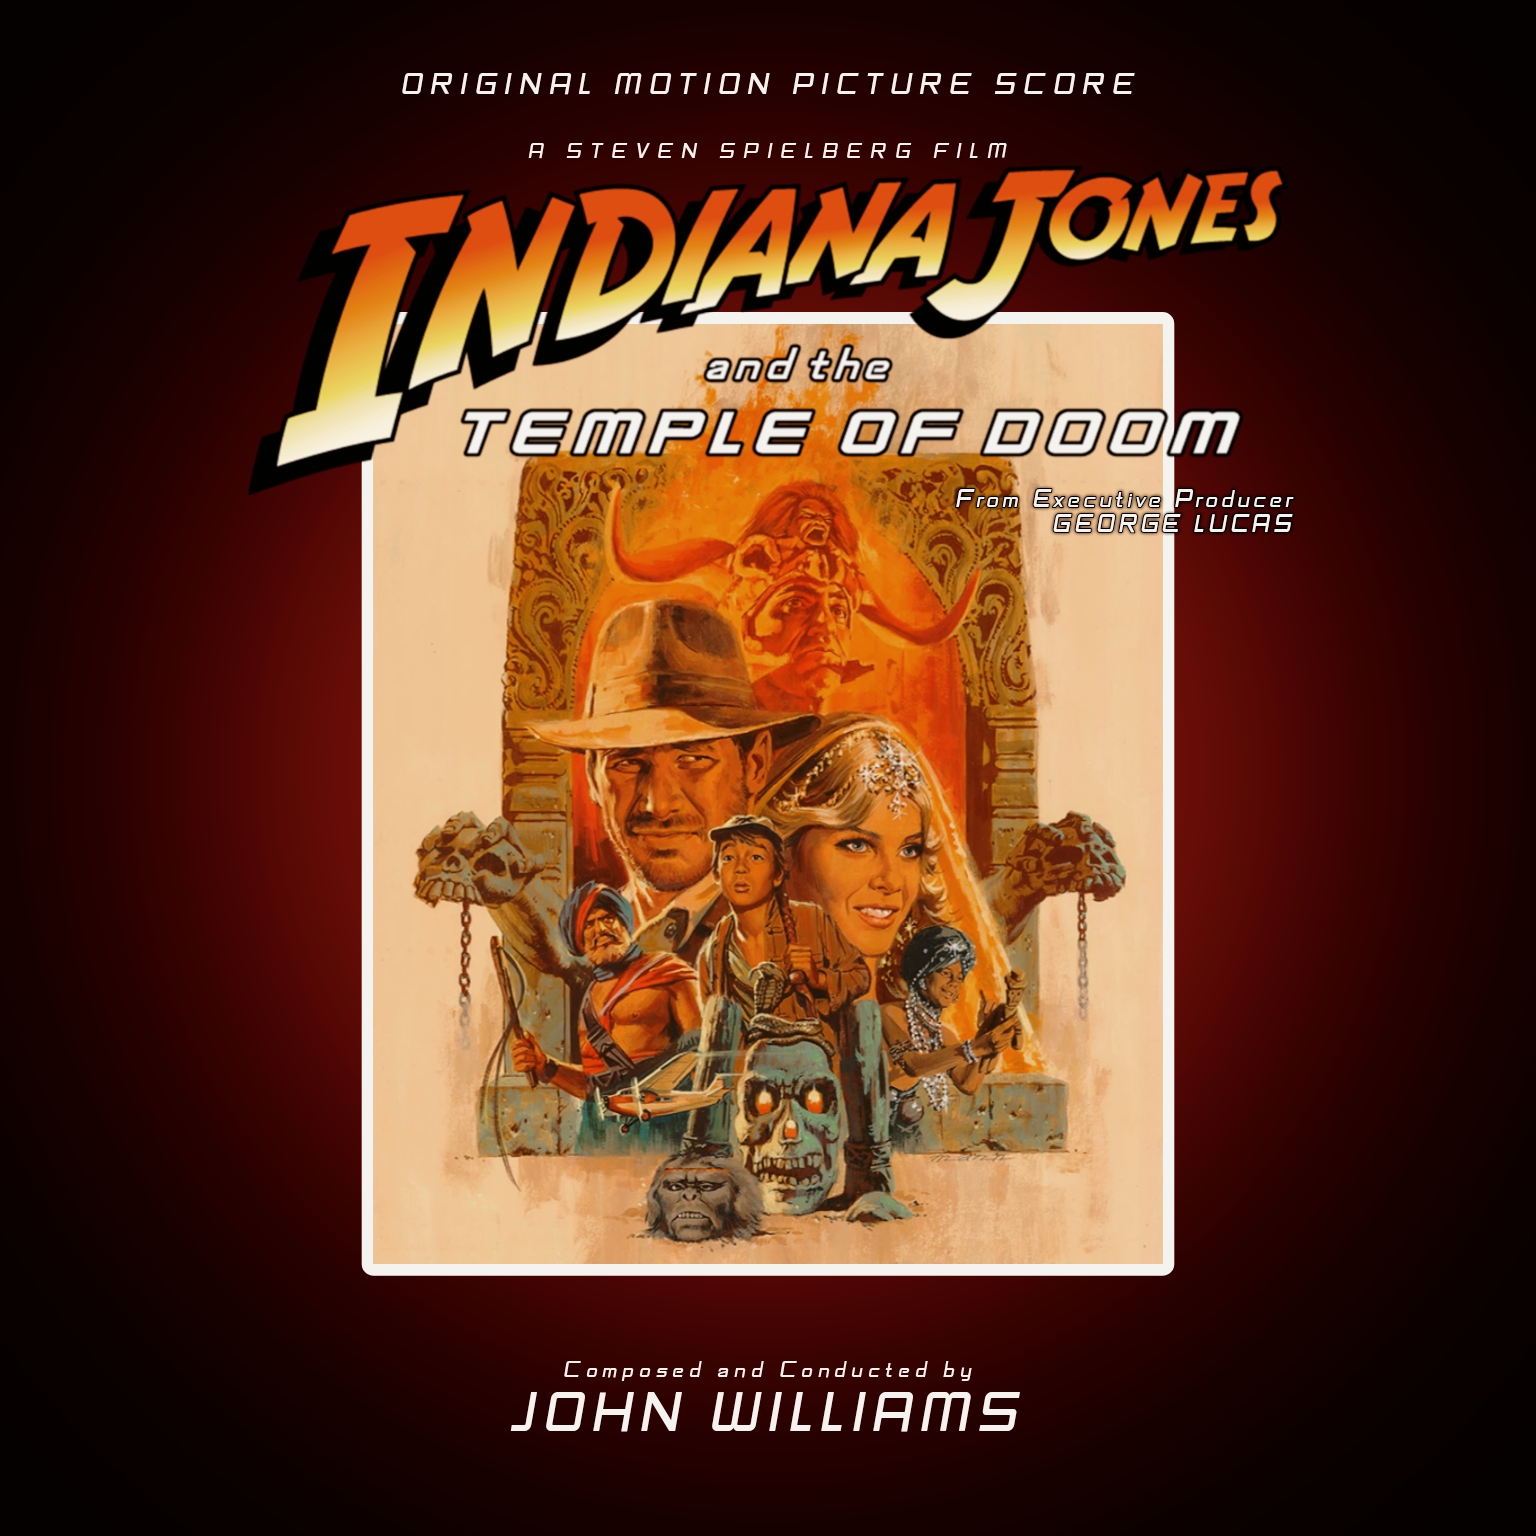 Indiana Jones 2 OST (Custom AW) by JT00567 on DeviantArt